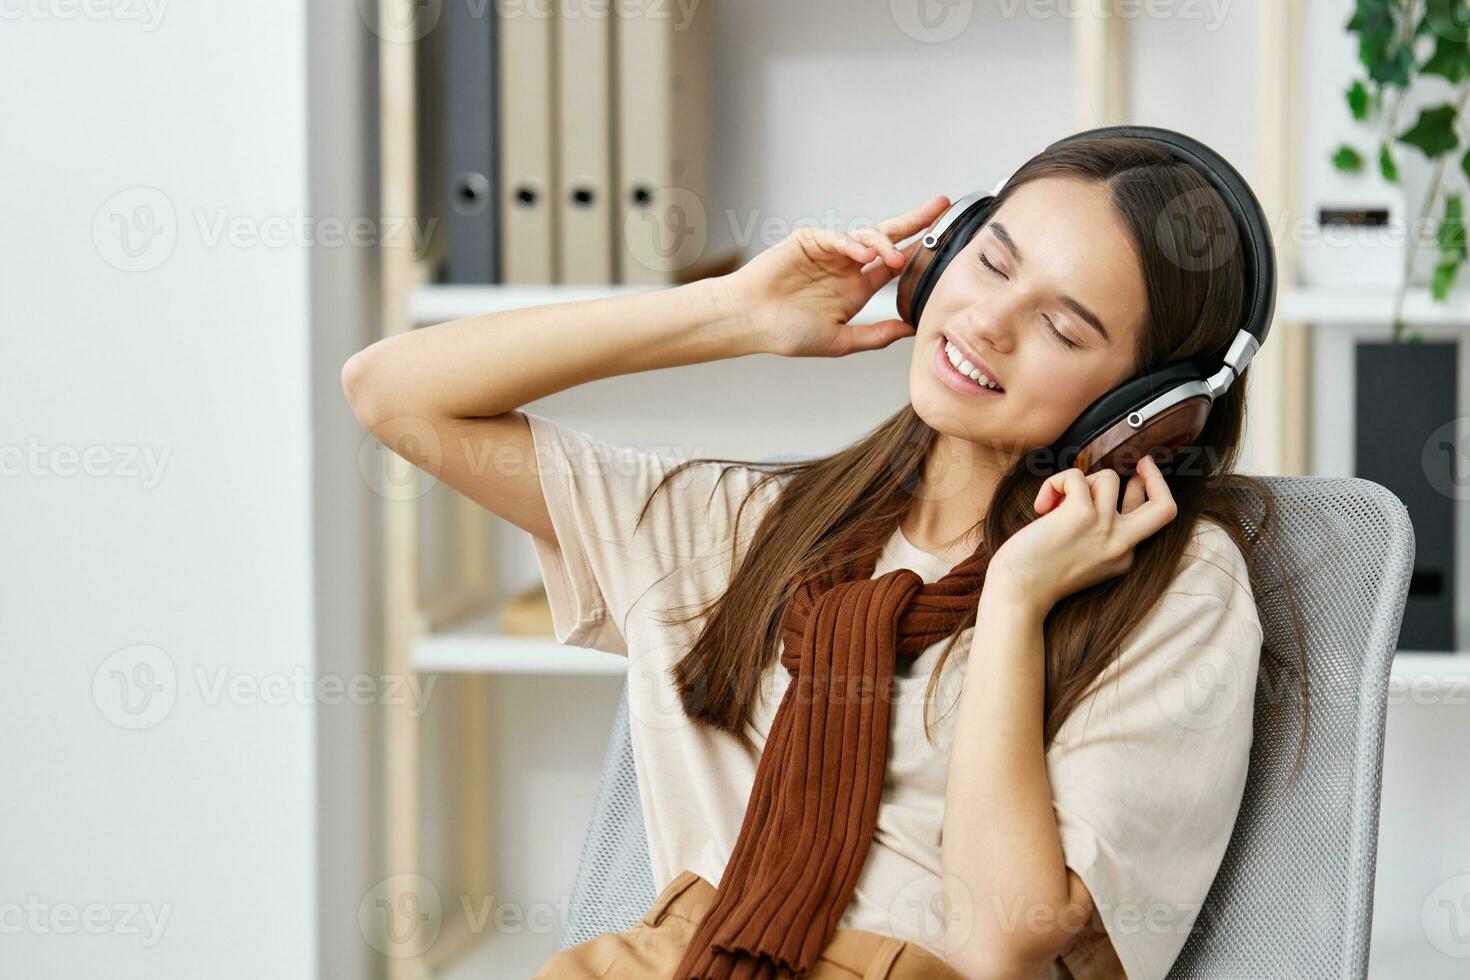 teléfono Adolescente silla contento niña sonrisa estilo de vida auriculares meditación música foto